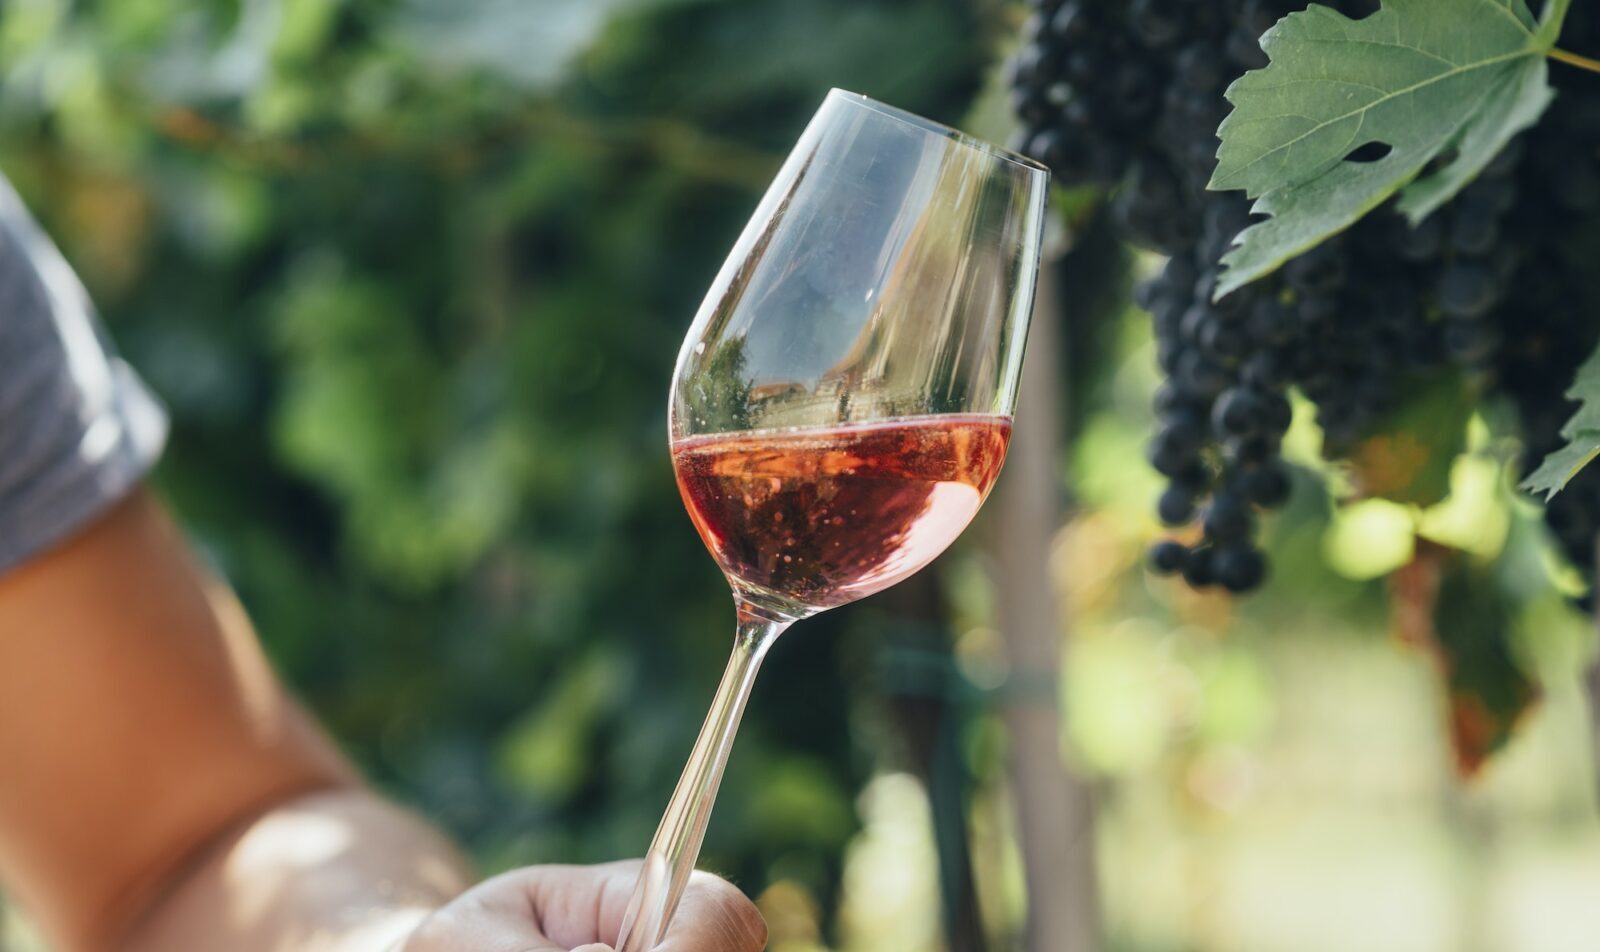 Wine tasting in outdoor winery.